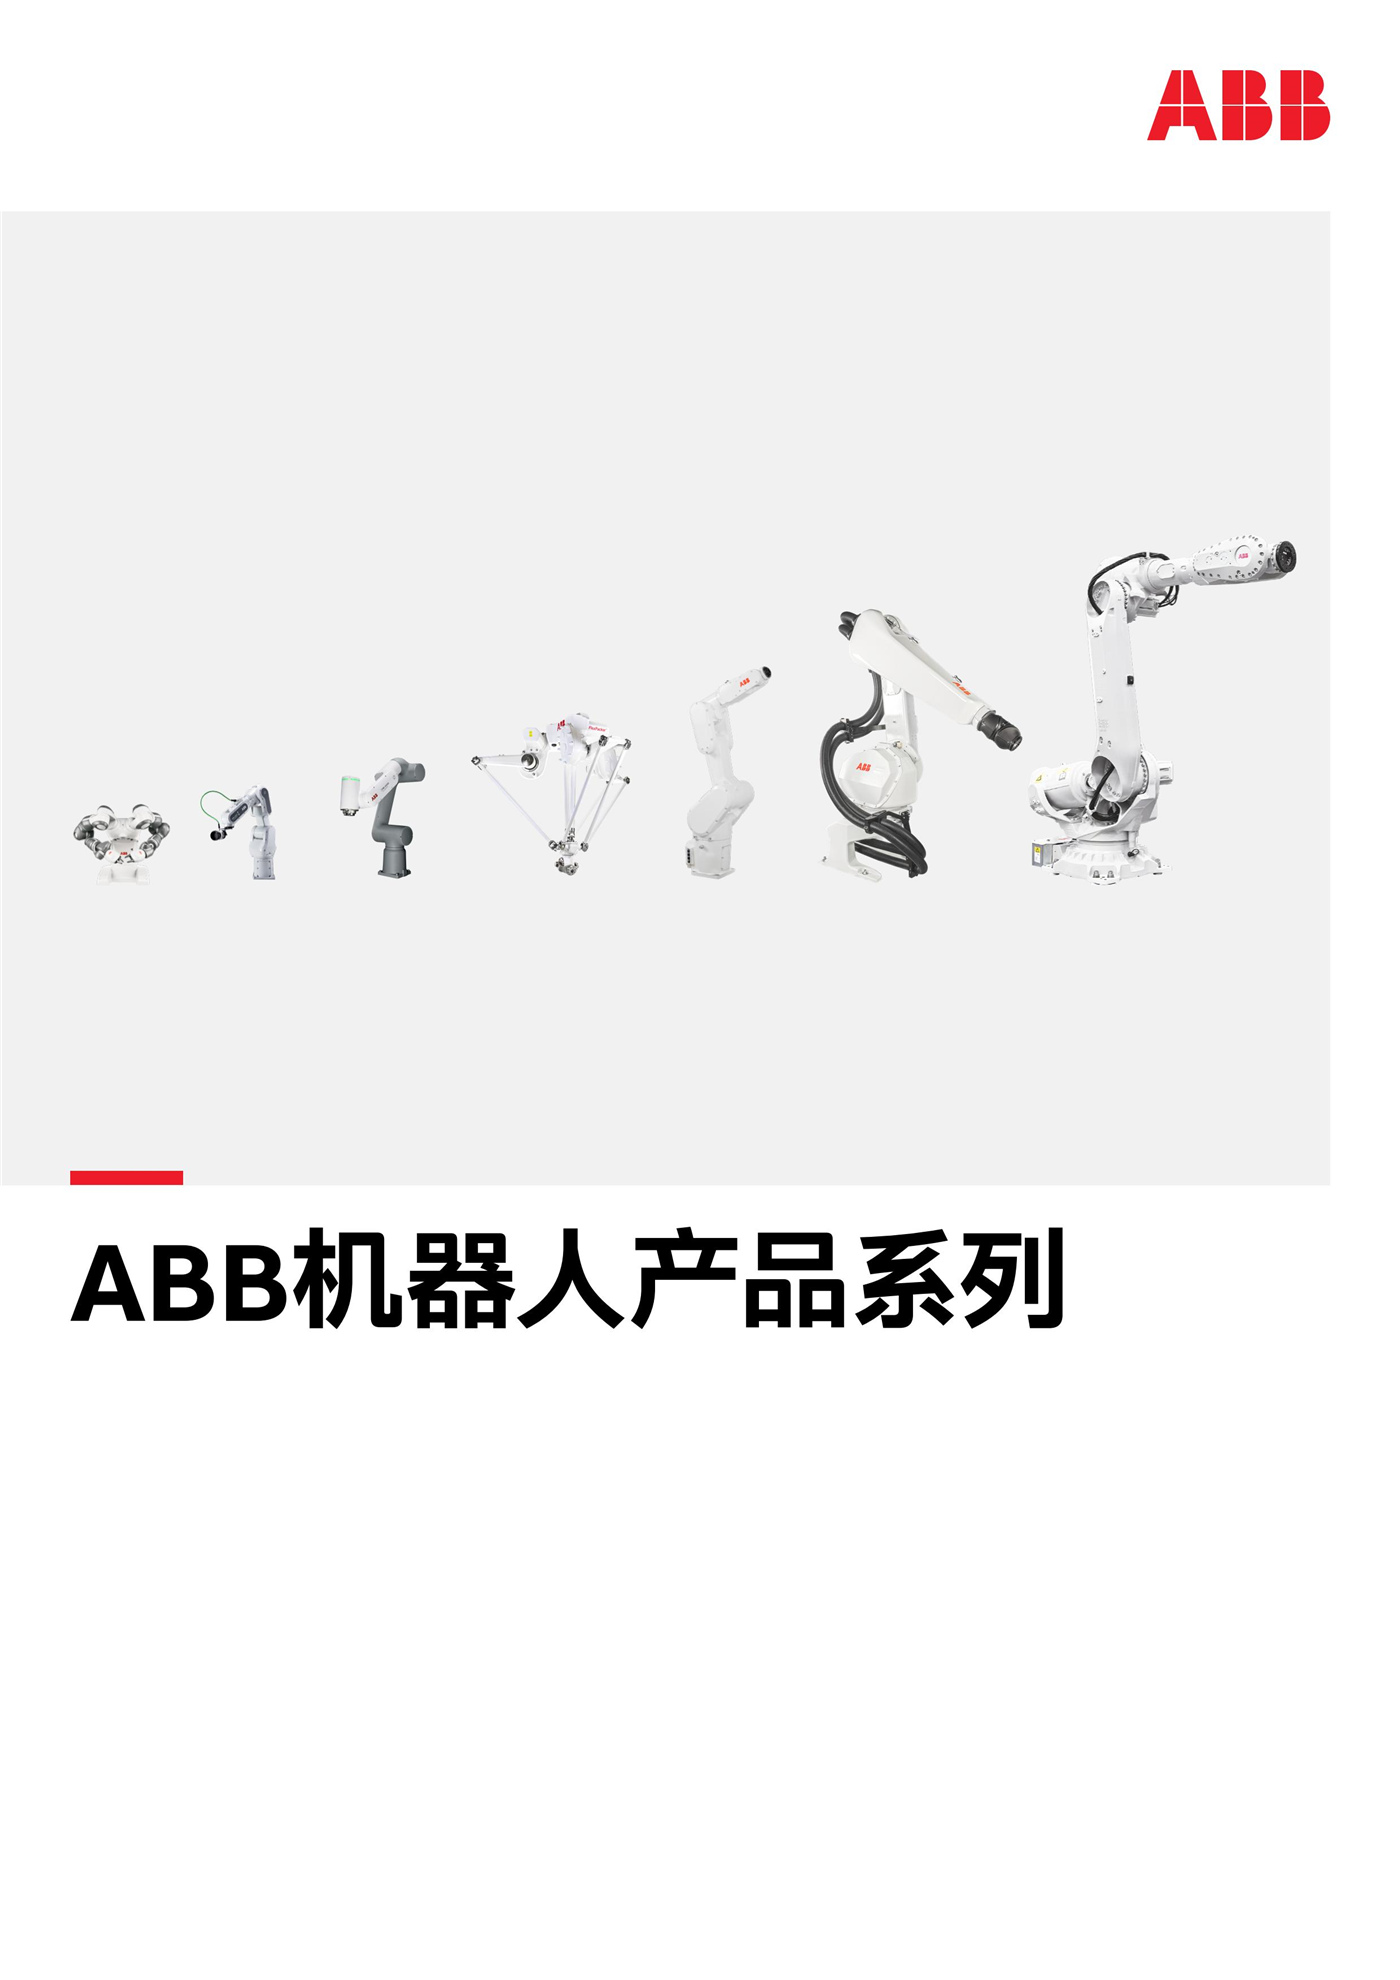 ABB-Robotics-ProductRange-20210607_ms_CN_00.jpg